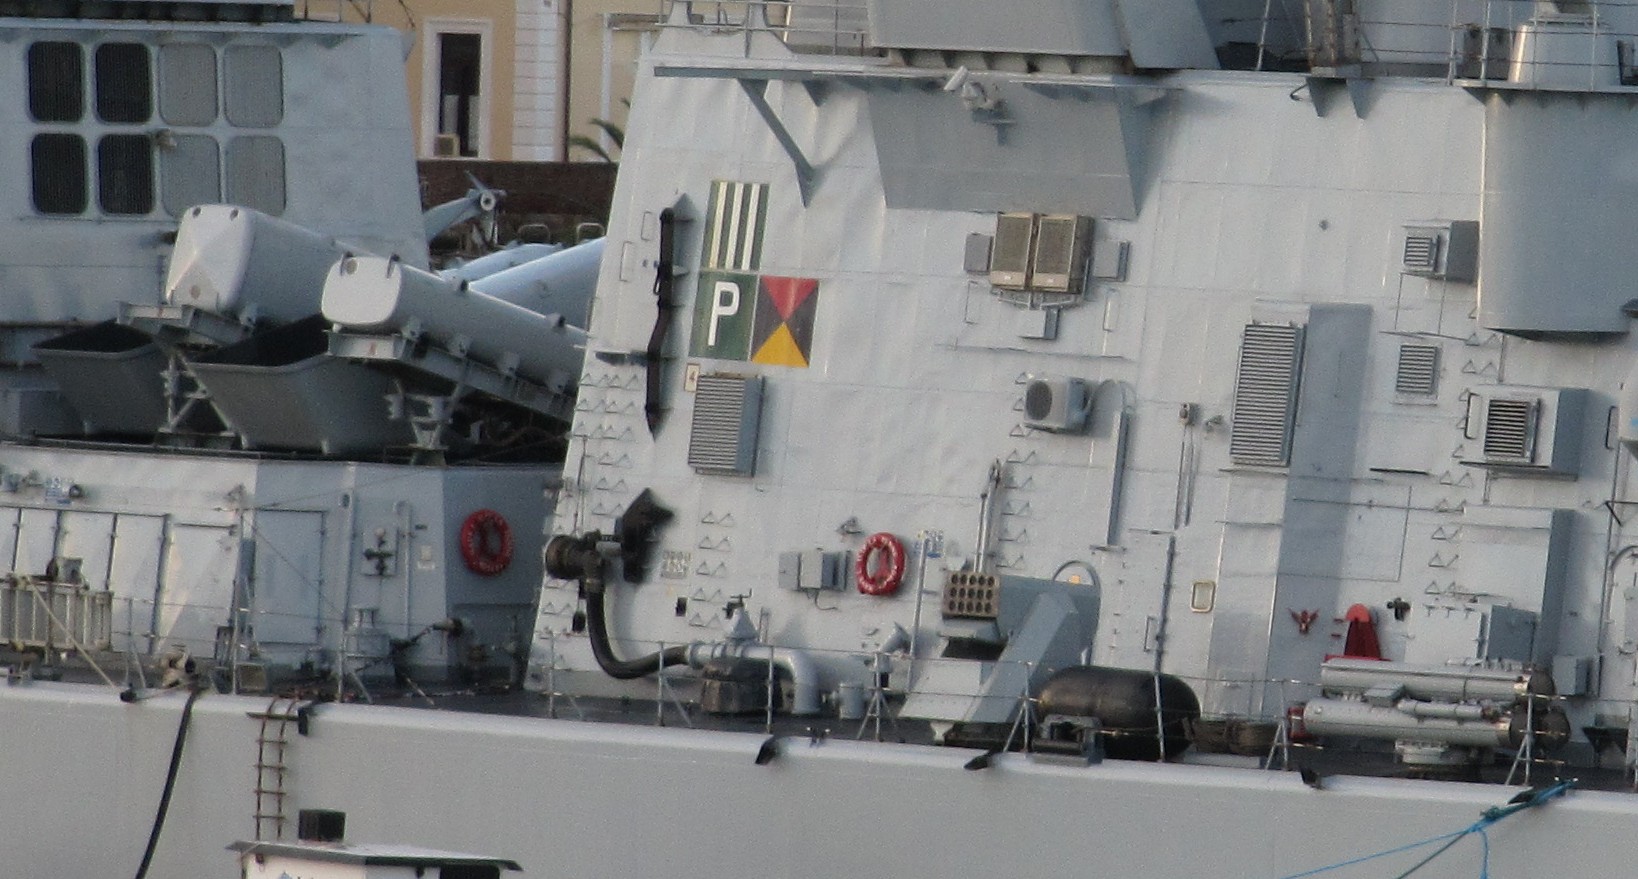 d-560 luigi durand de la penne its nave guided missile destroyer ddg italian navy marina militare 69b